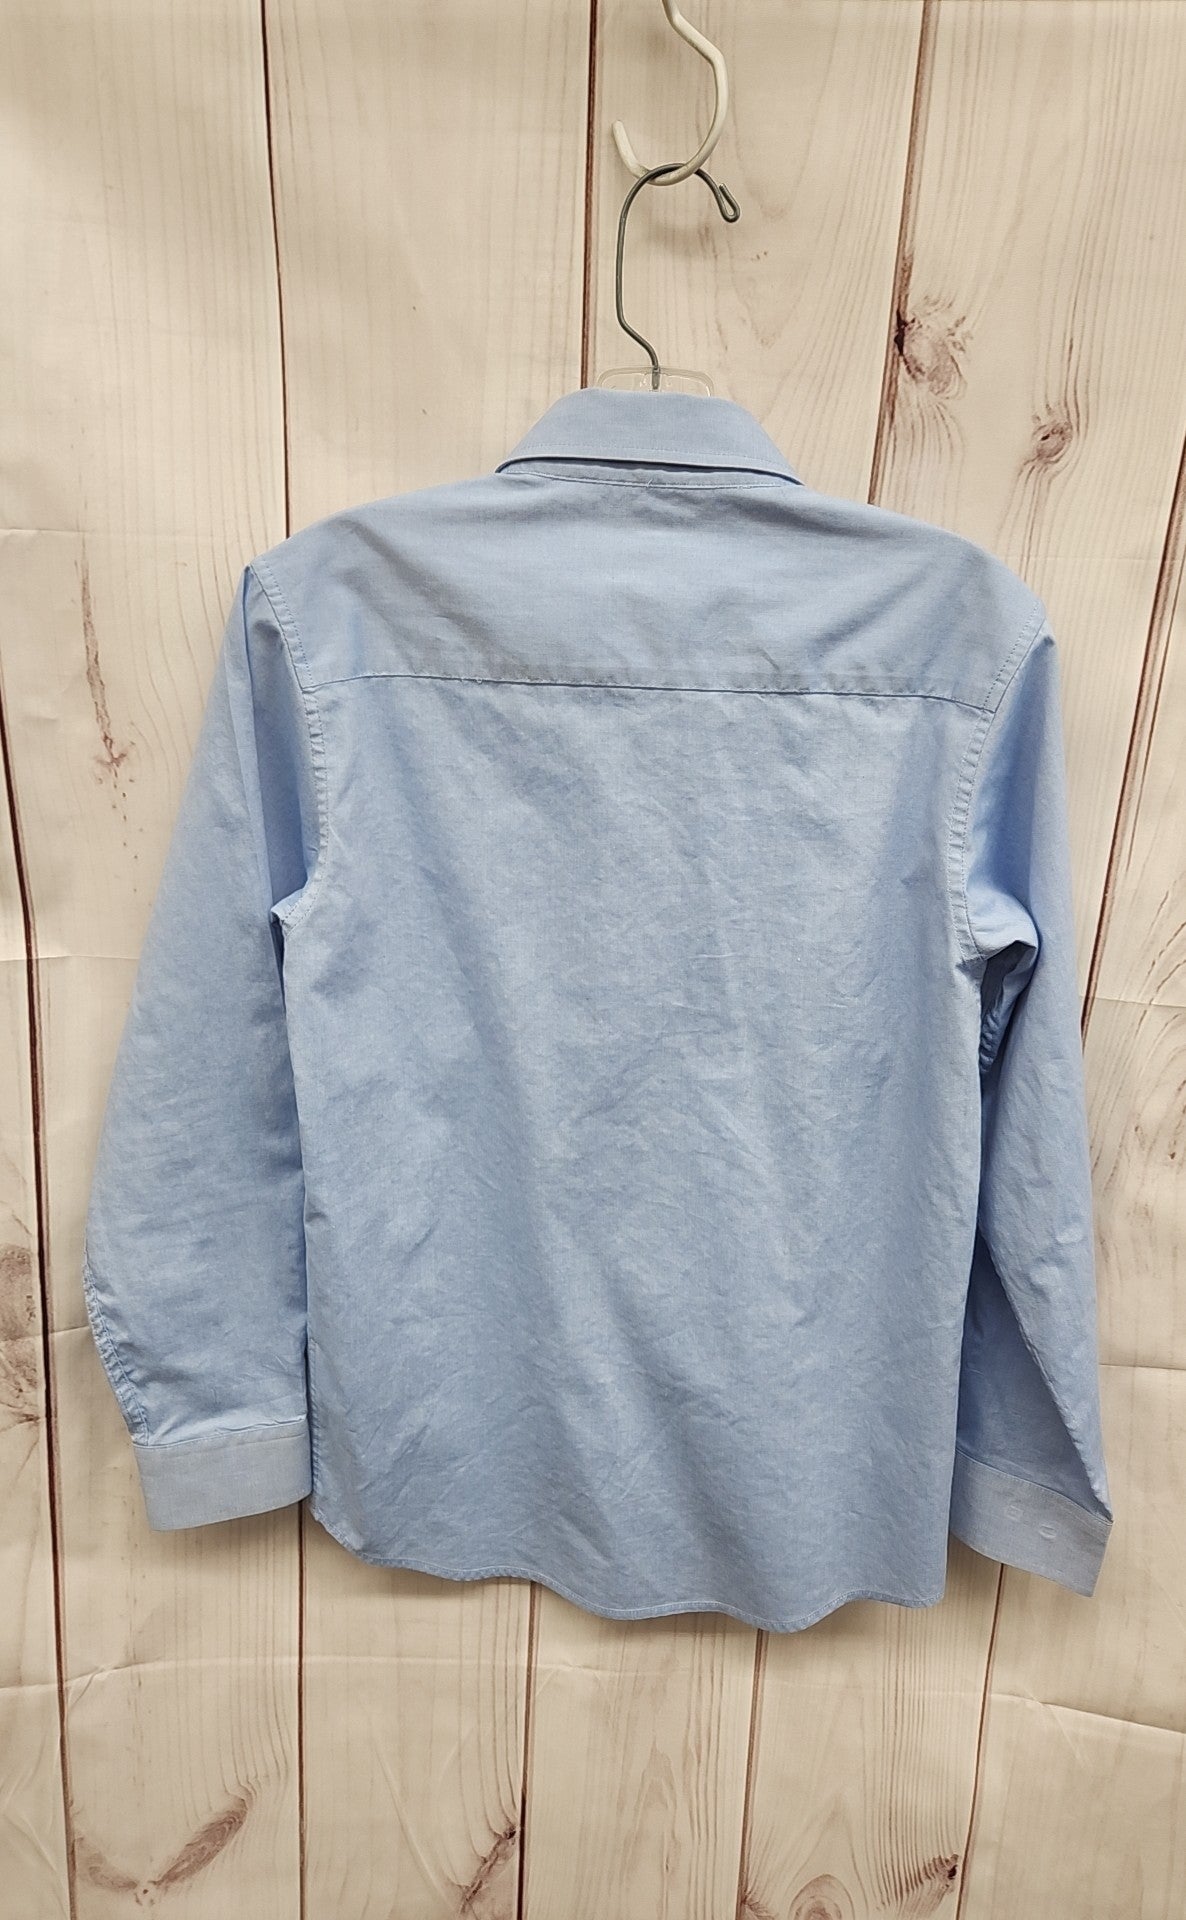 Tommy Hilfiger Boy's Size 16 Blue Shirt